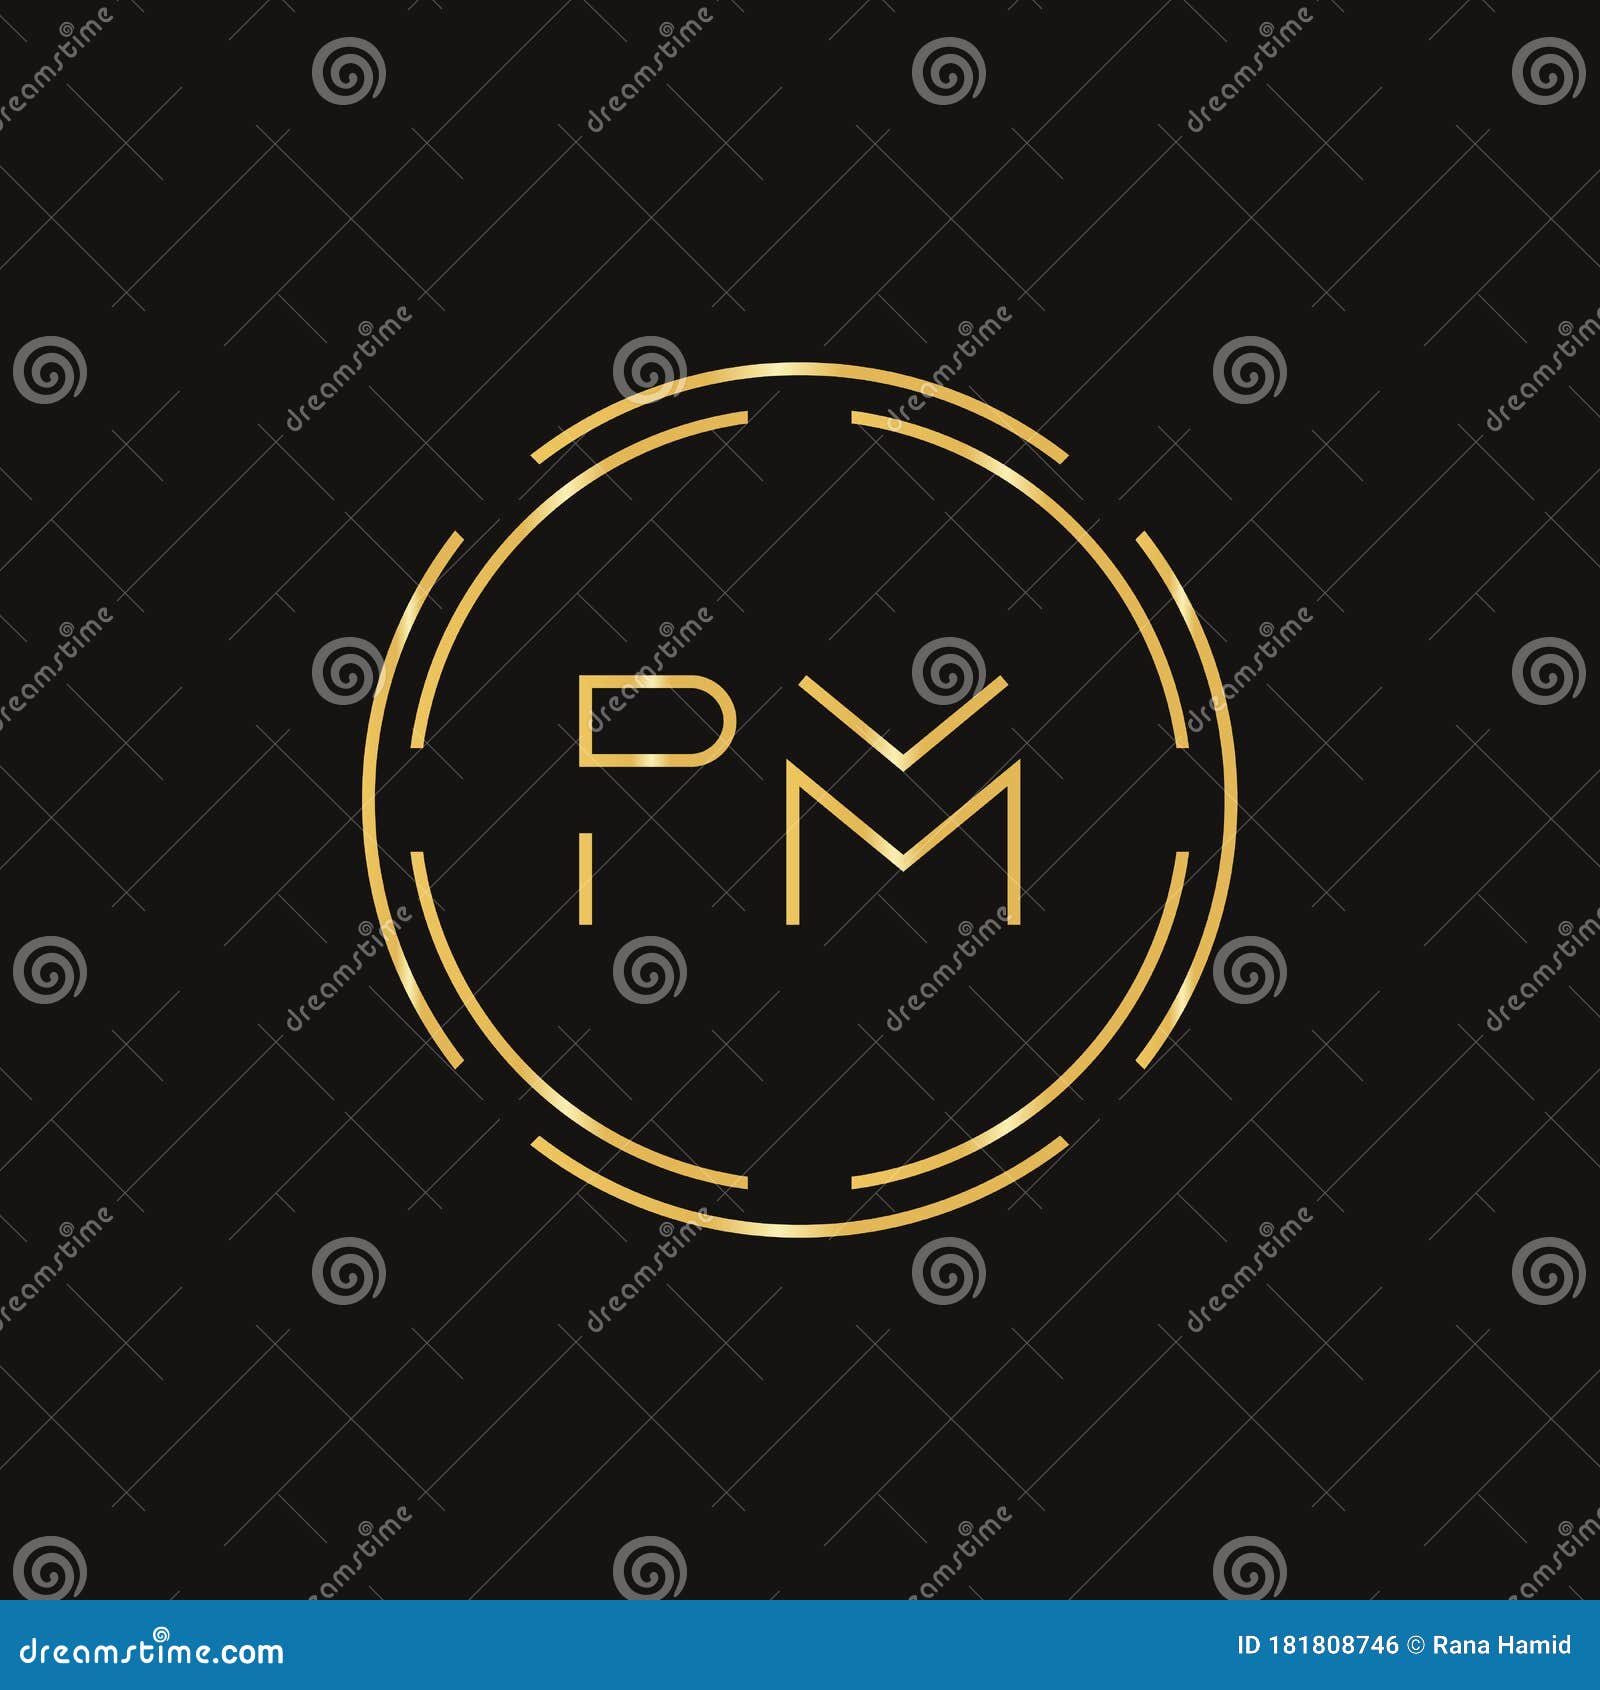 Initial Letter PM Logo Design Vector Template. PM Letter Logo